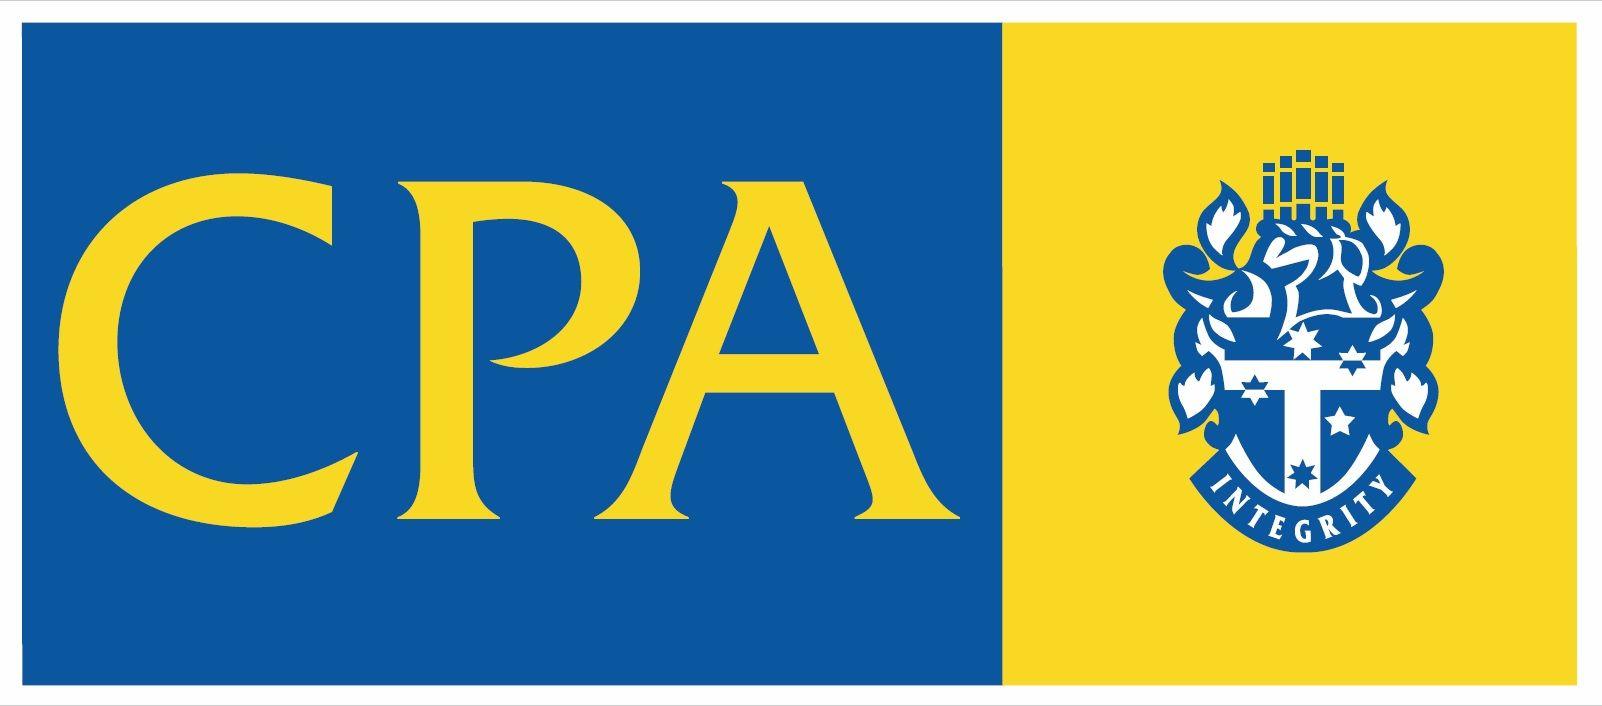 CPA Logo - Cpa Logo Colour With Line